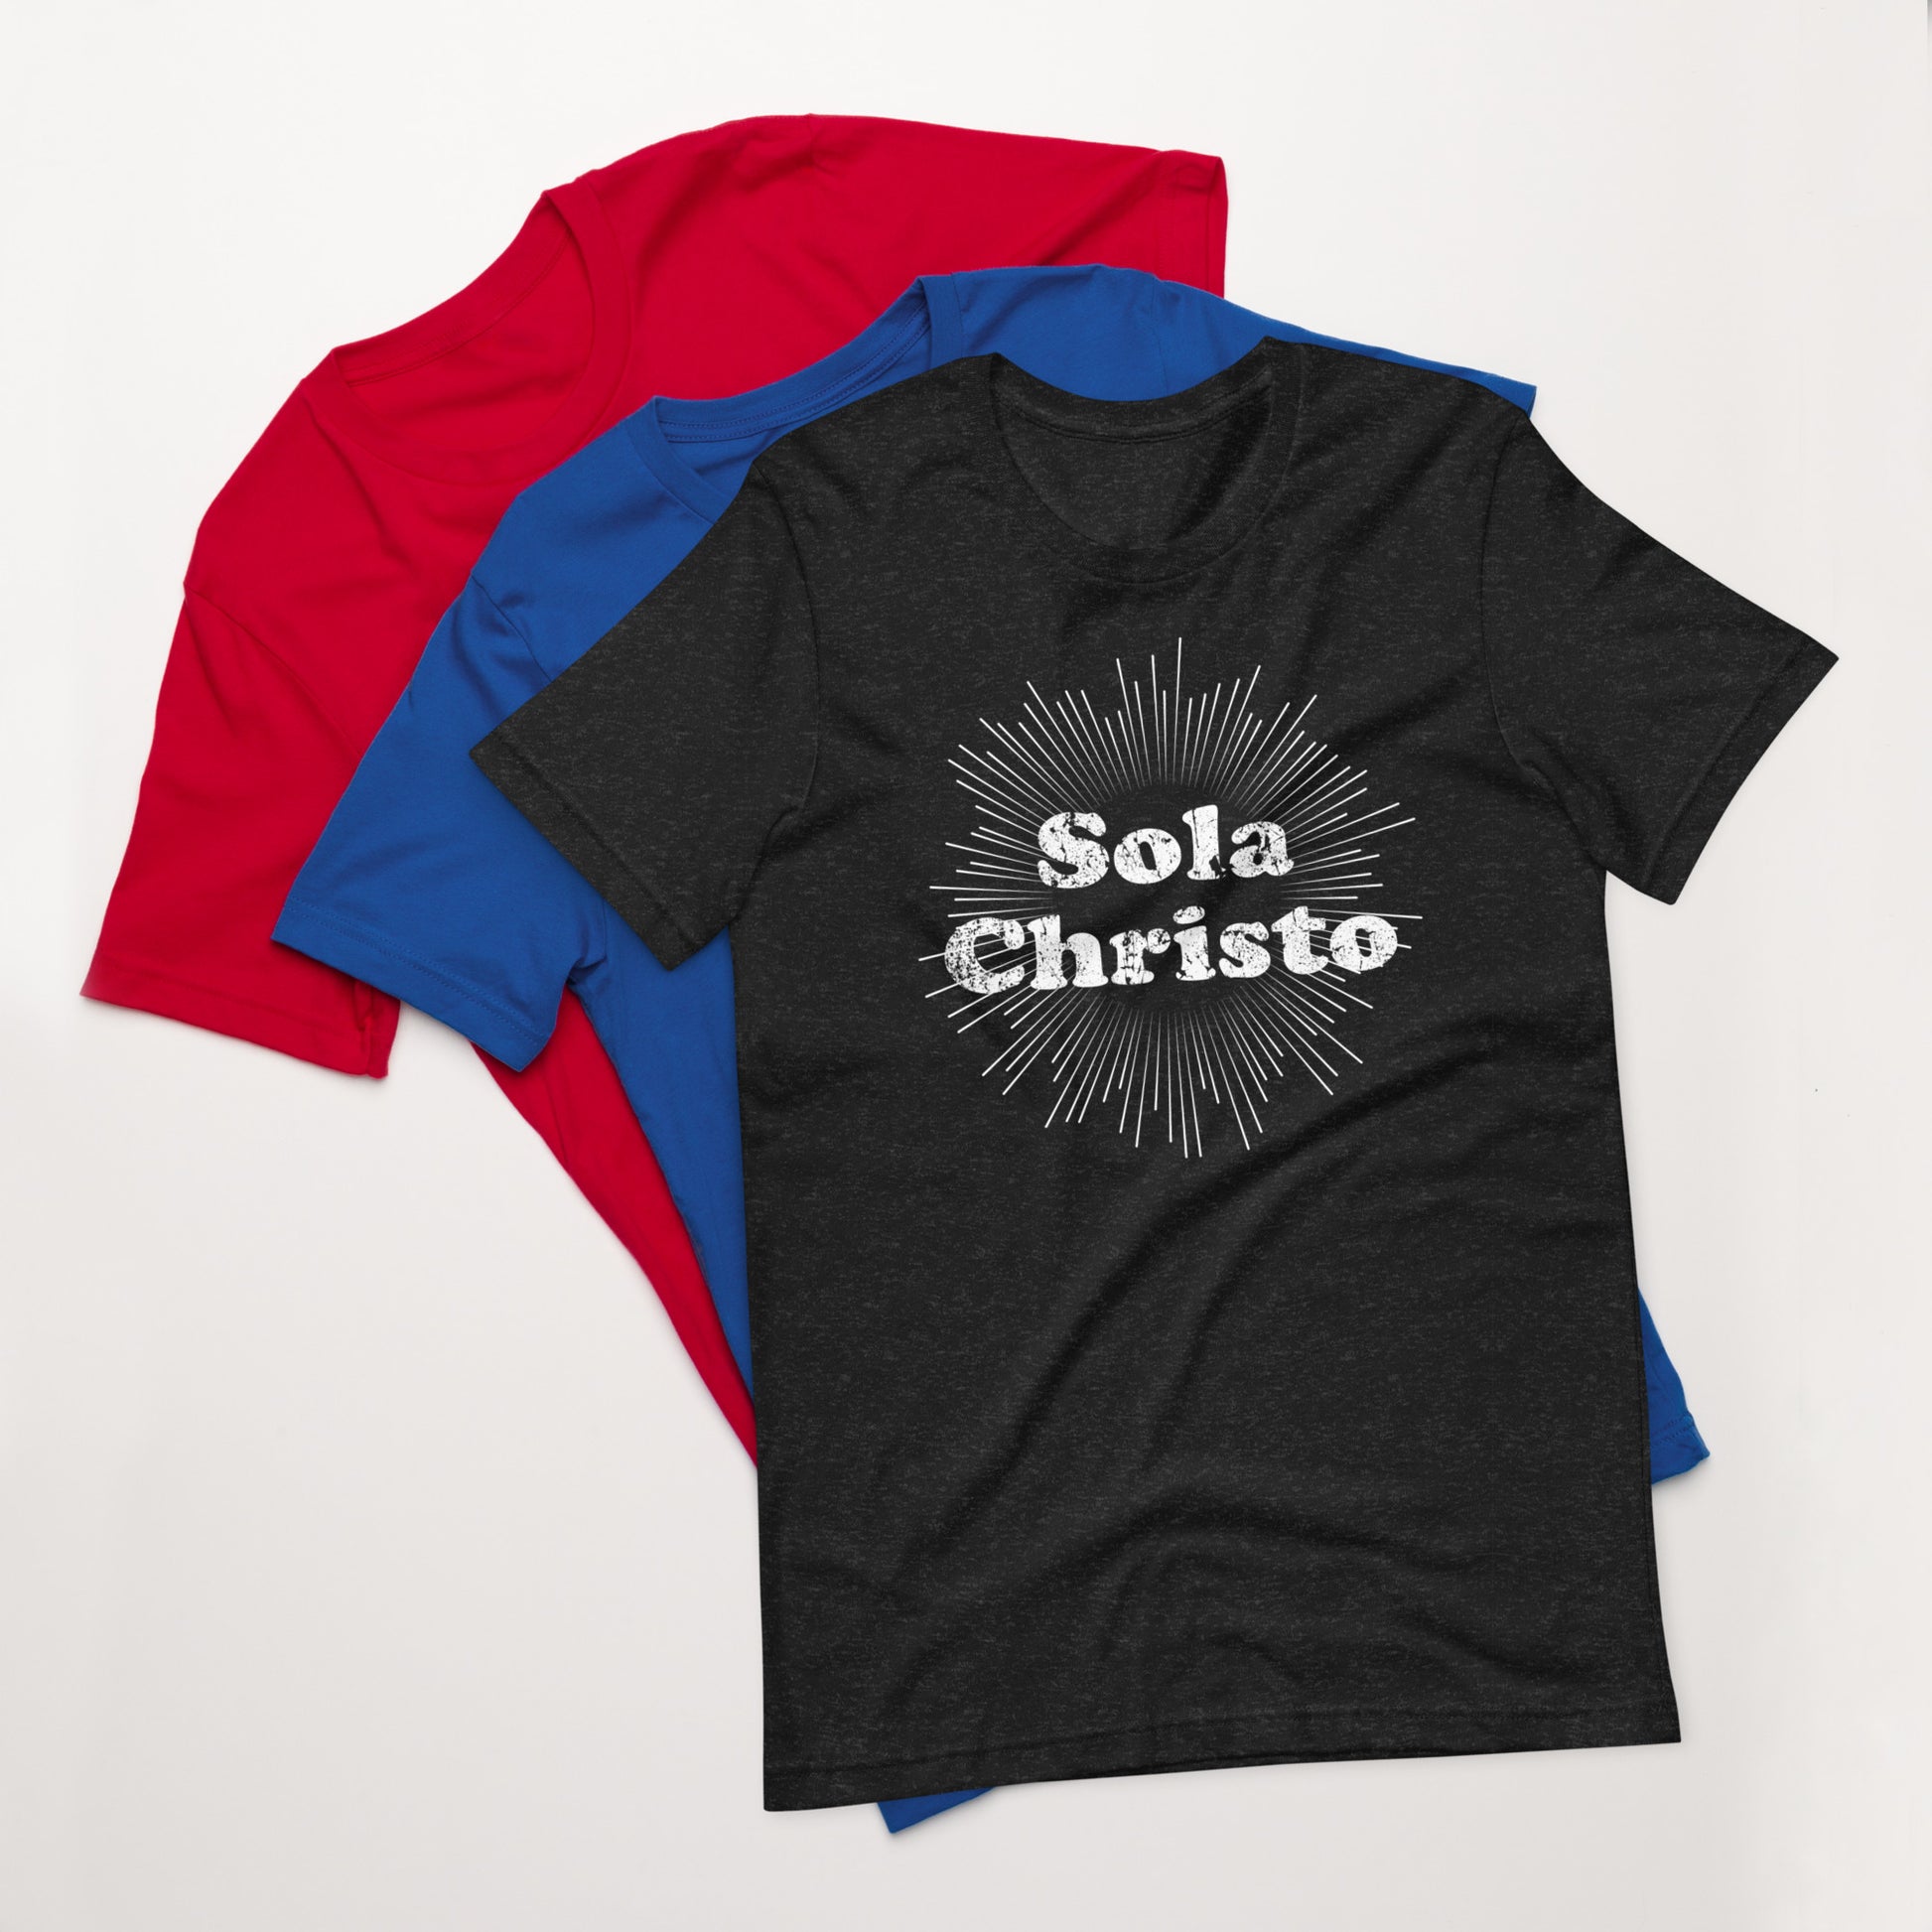 Sola Christo Faded Sunburst Unisex t-shirt - Solid Rock Designs | Christian Apparel